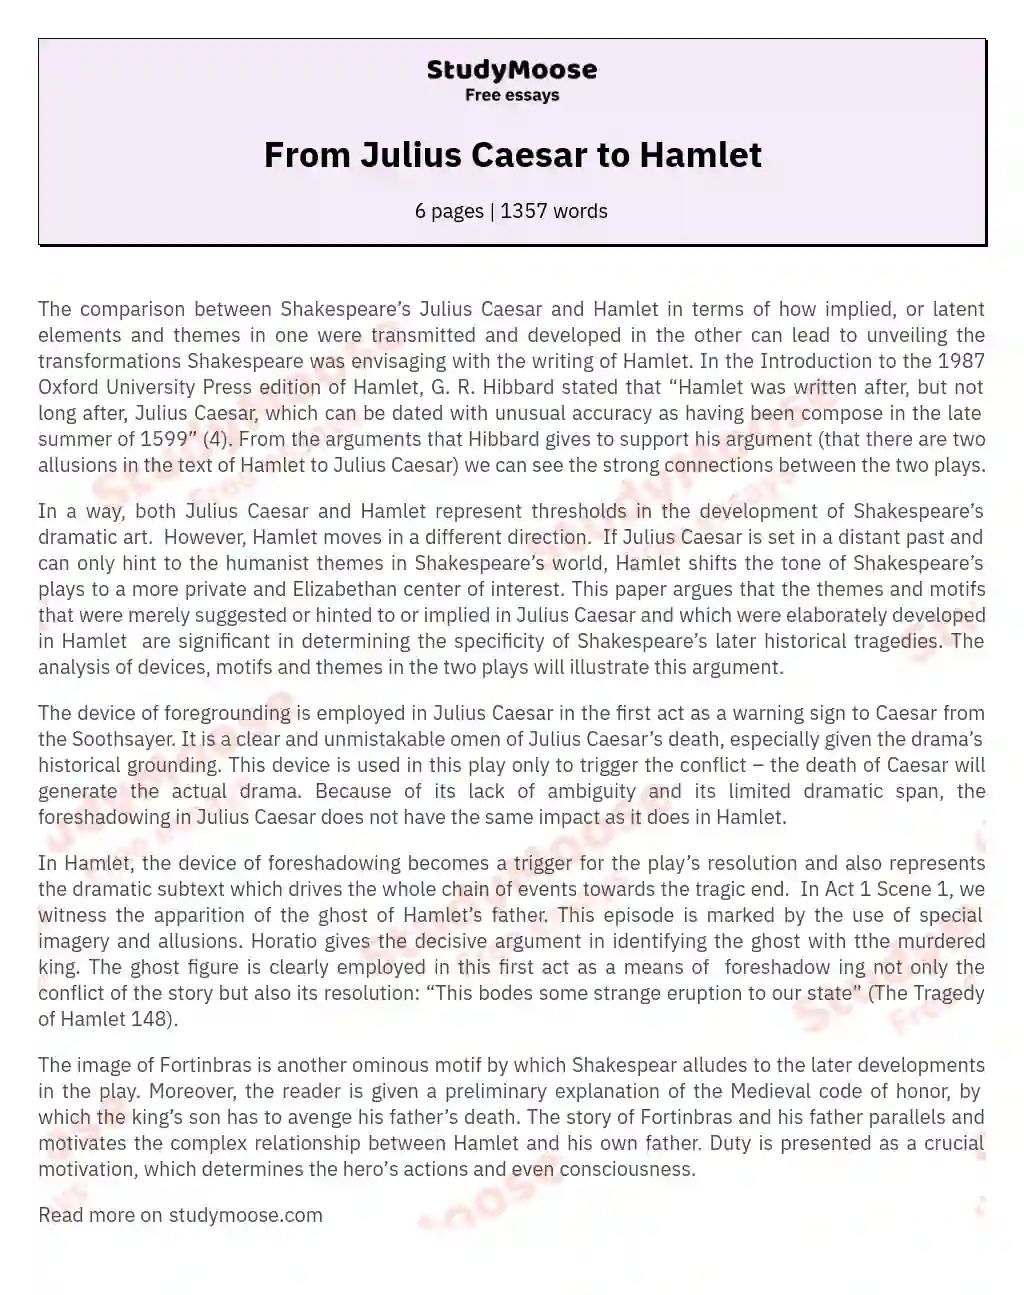 From Julius Caesar to Hamlet essay